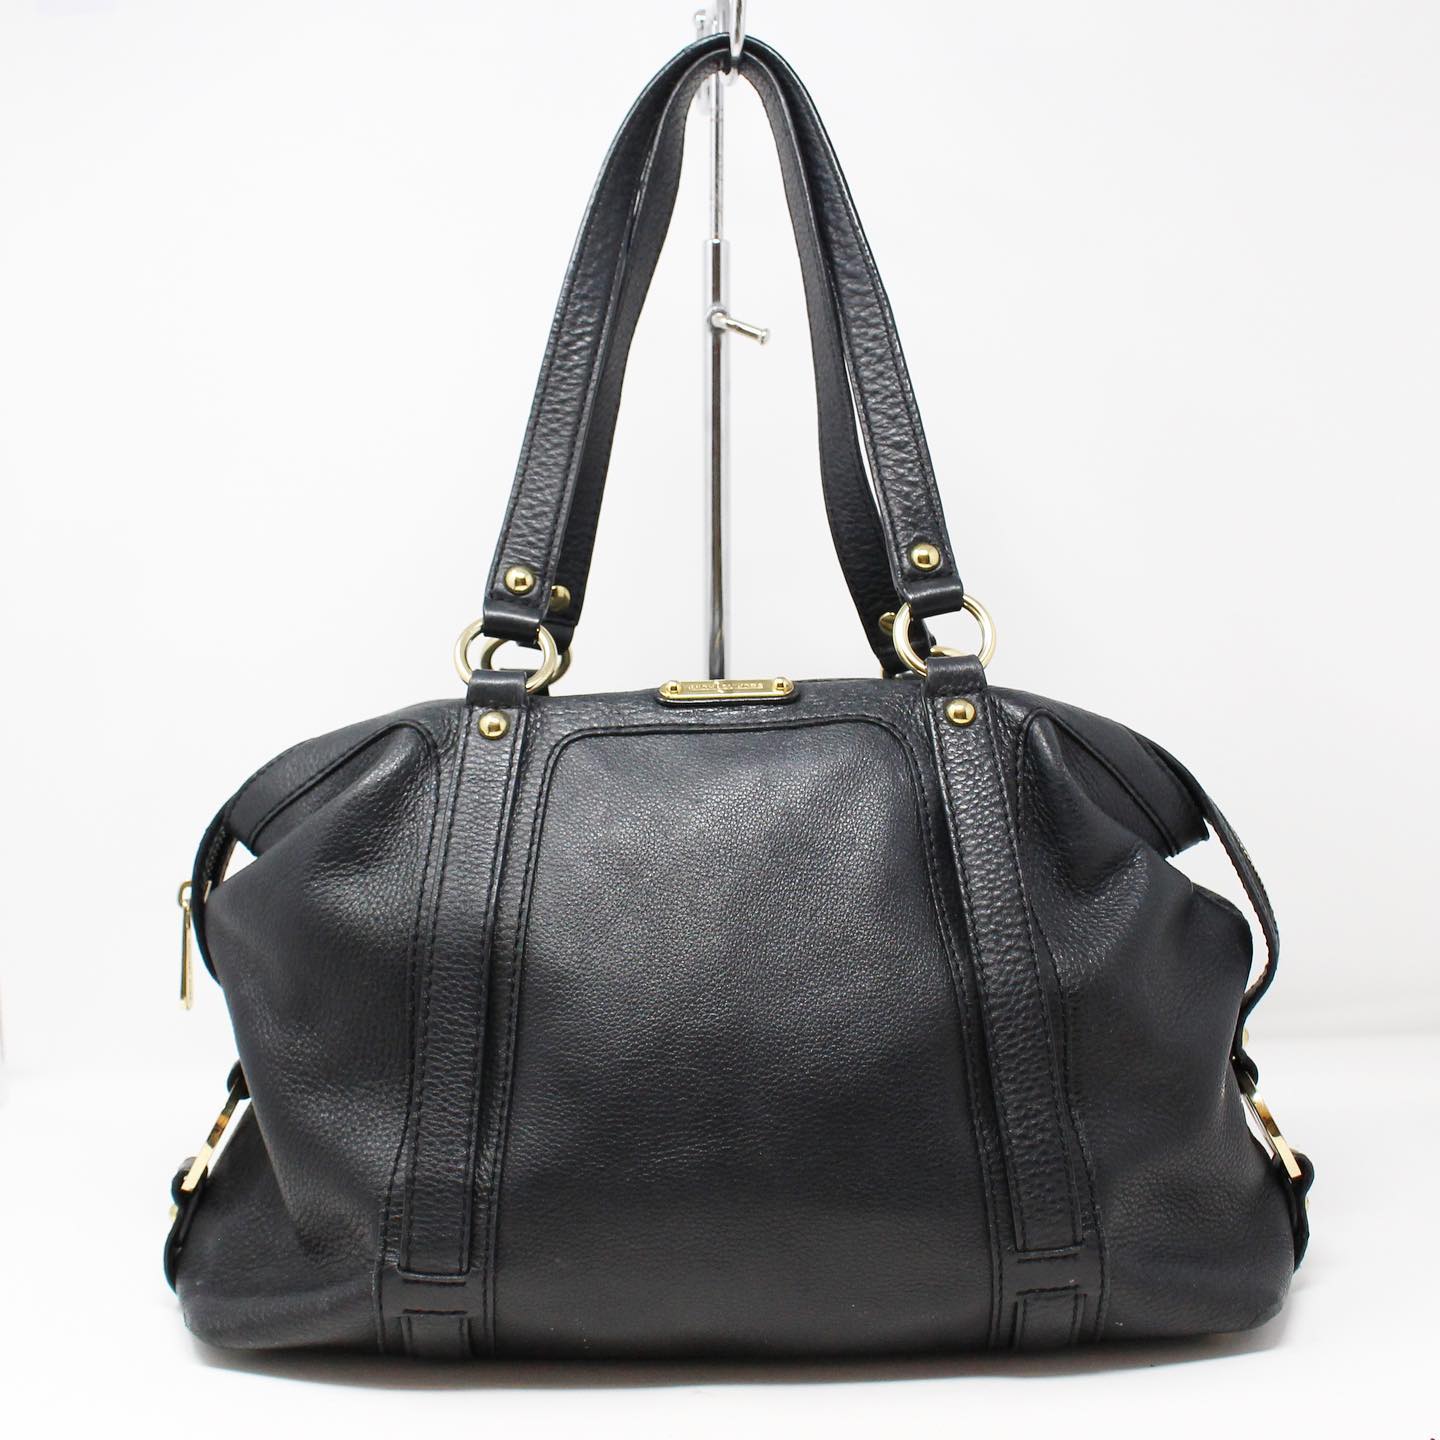 MICHAEL KORS Black Leather Handbag #27904 – ALL YOUR BLISS